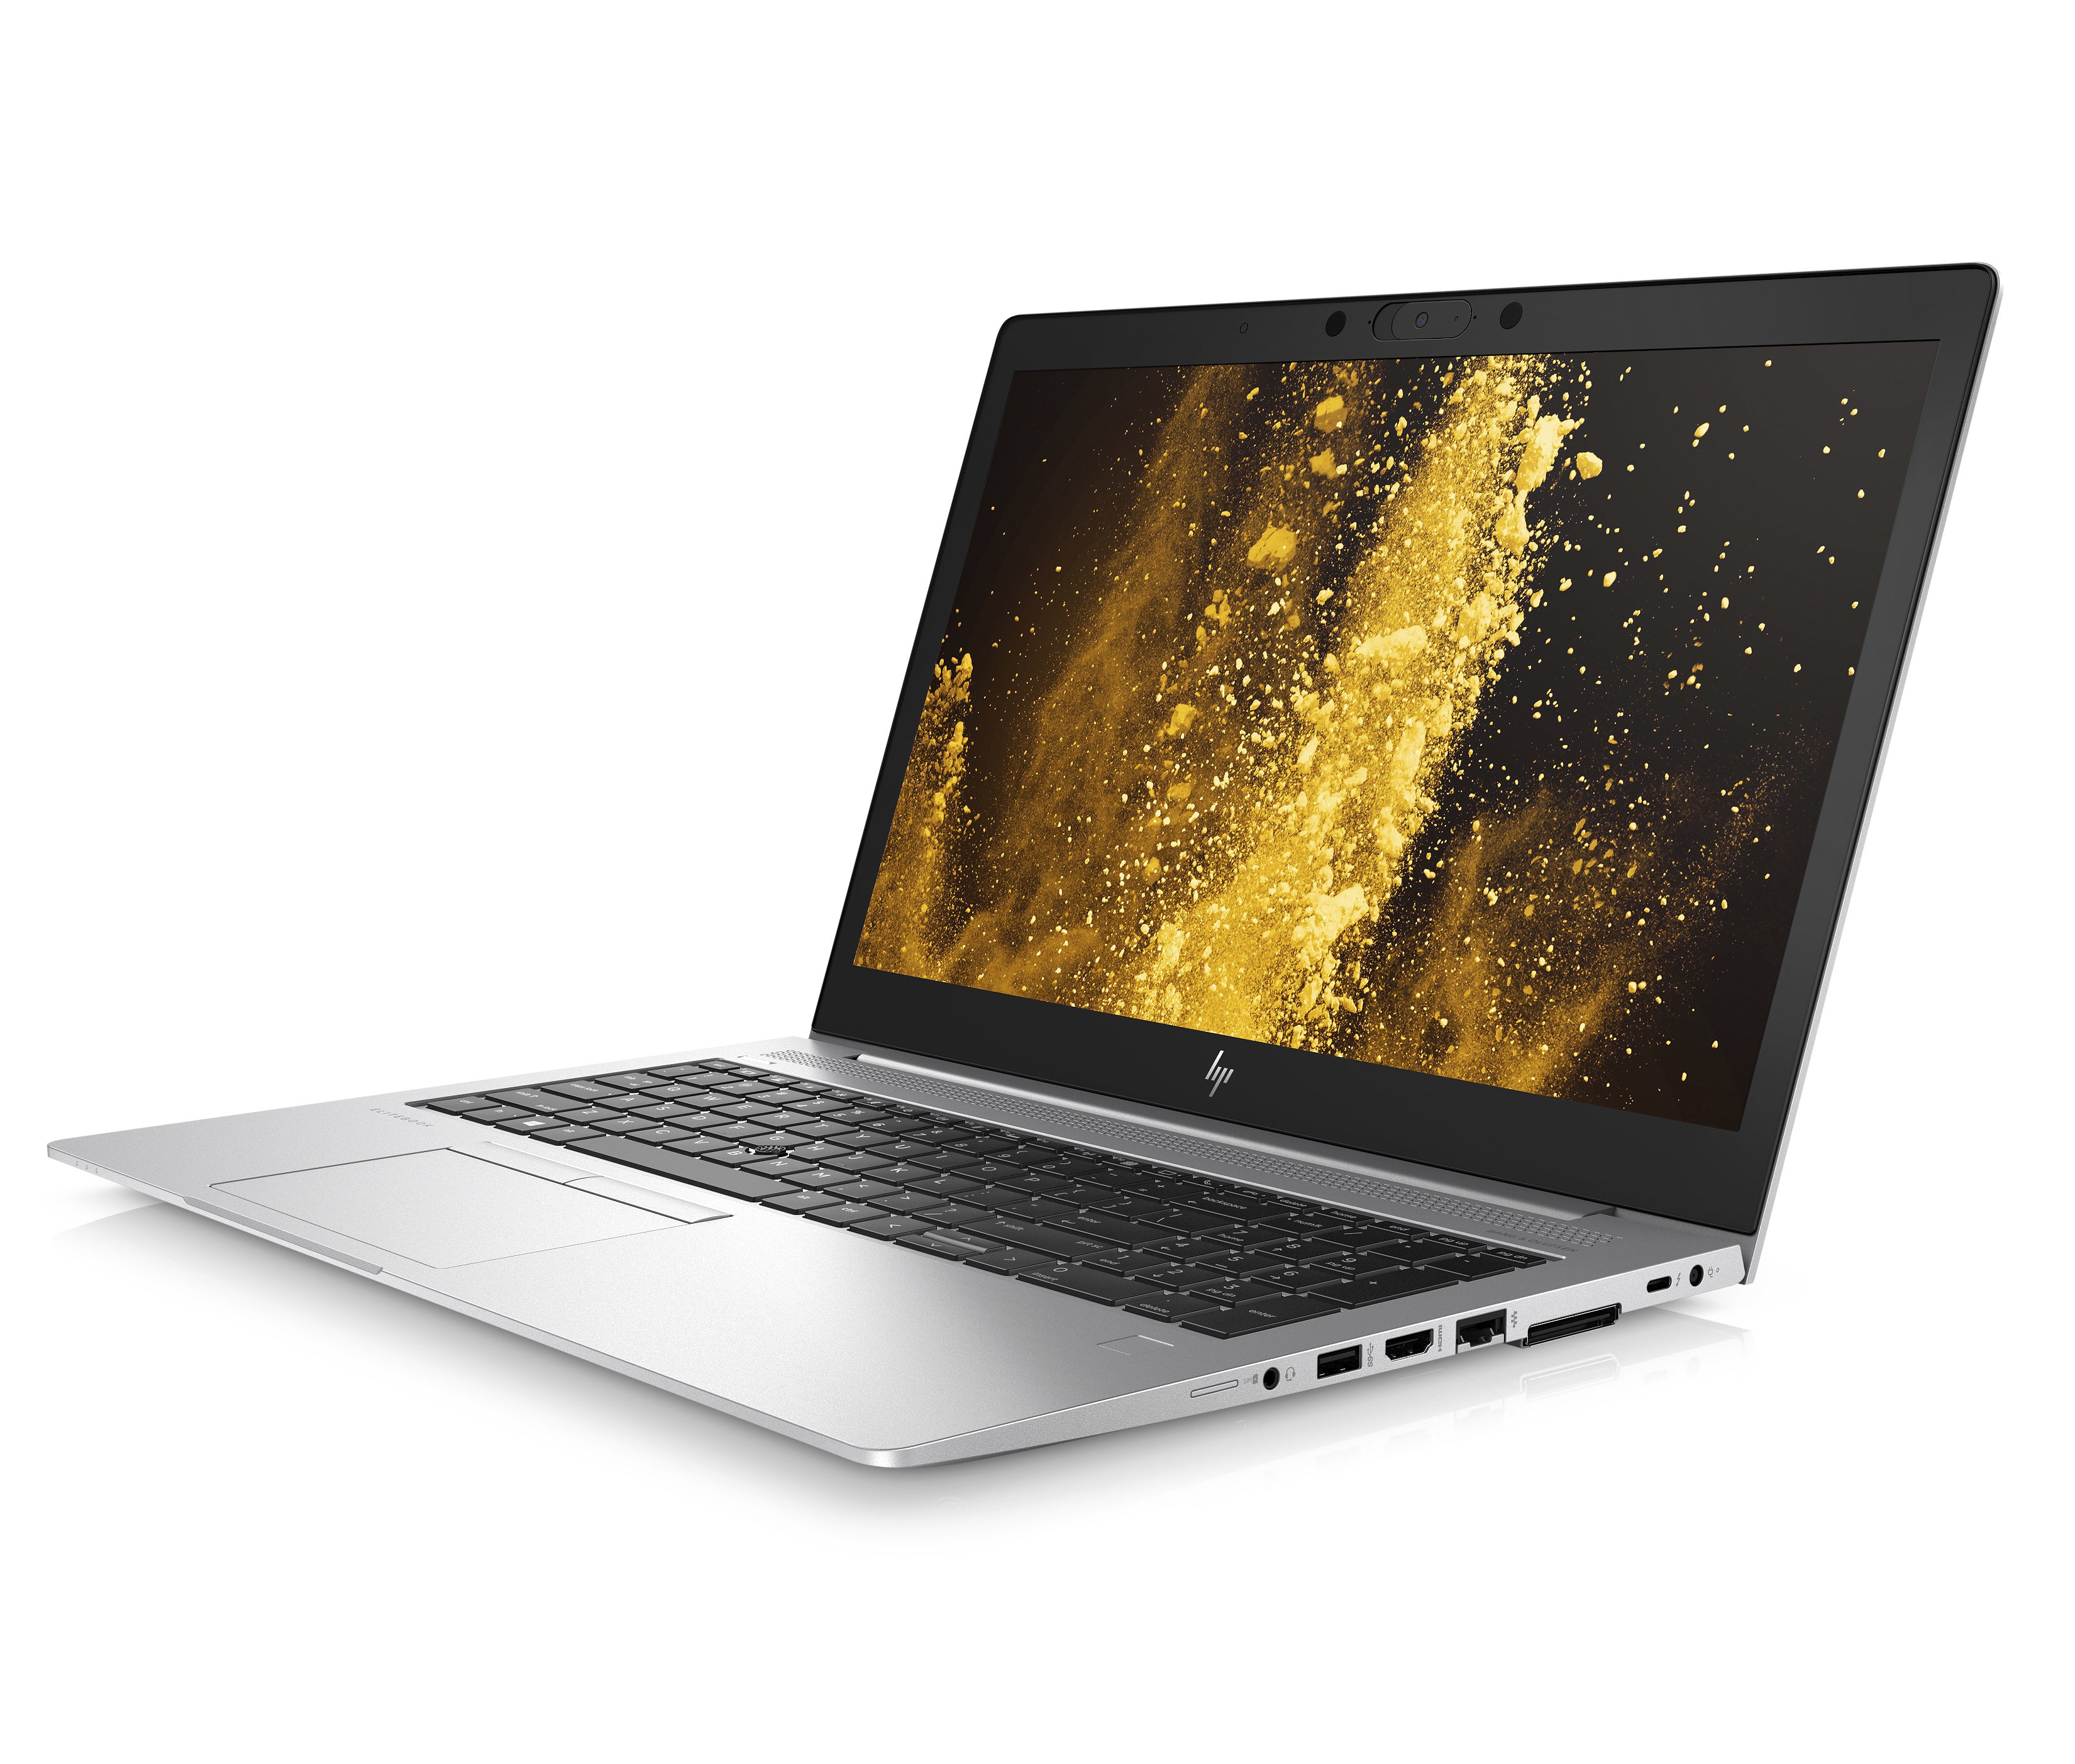 HP's EliteBook 800 G6 notebook series adds convenience, privacy